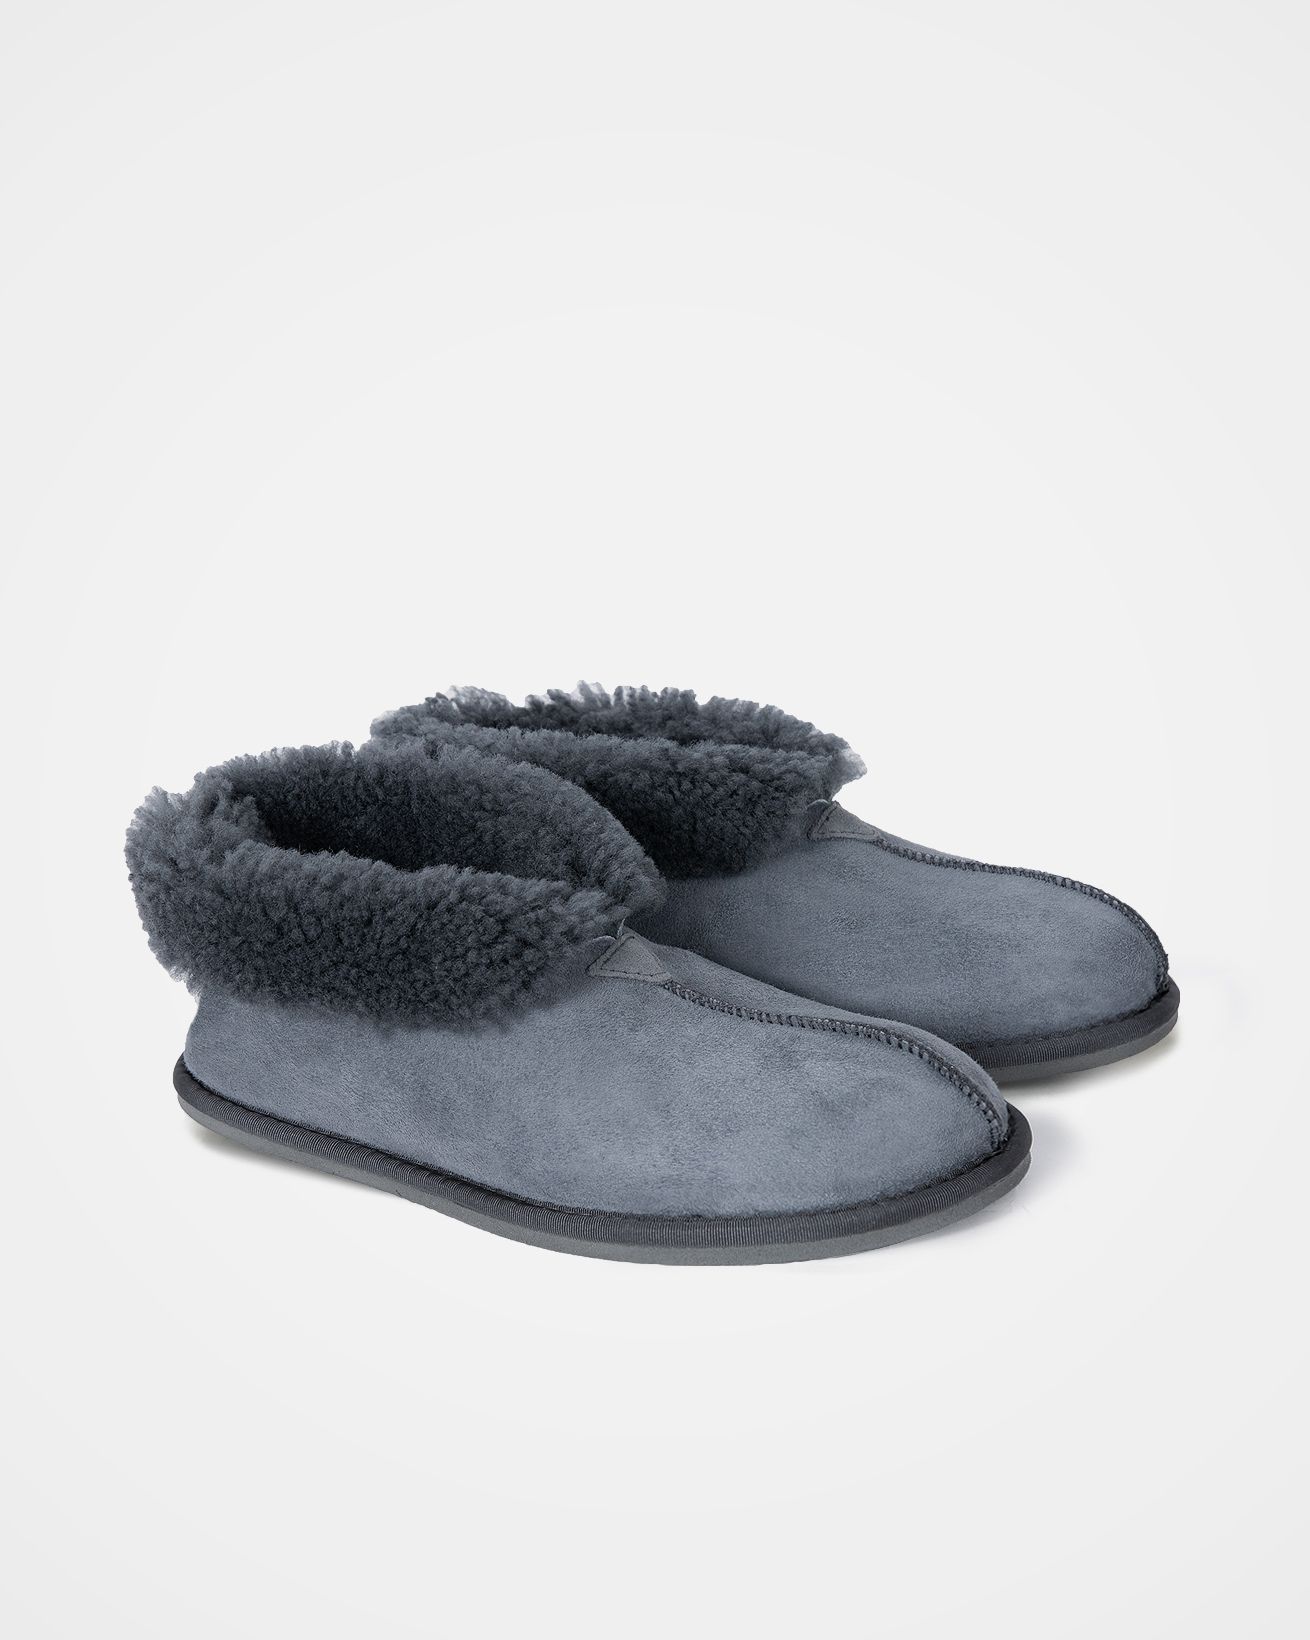 6618_mens sheepskin bootee slippers_pair.jpg